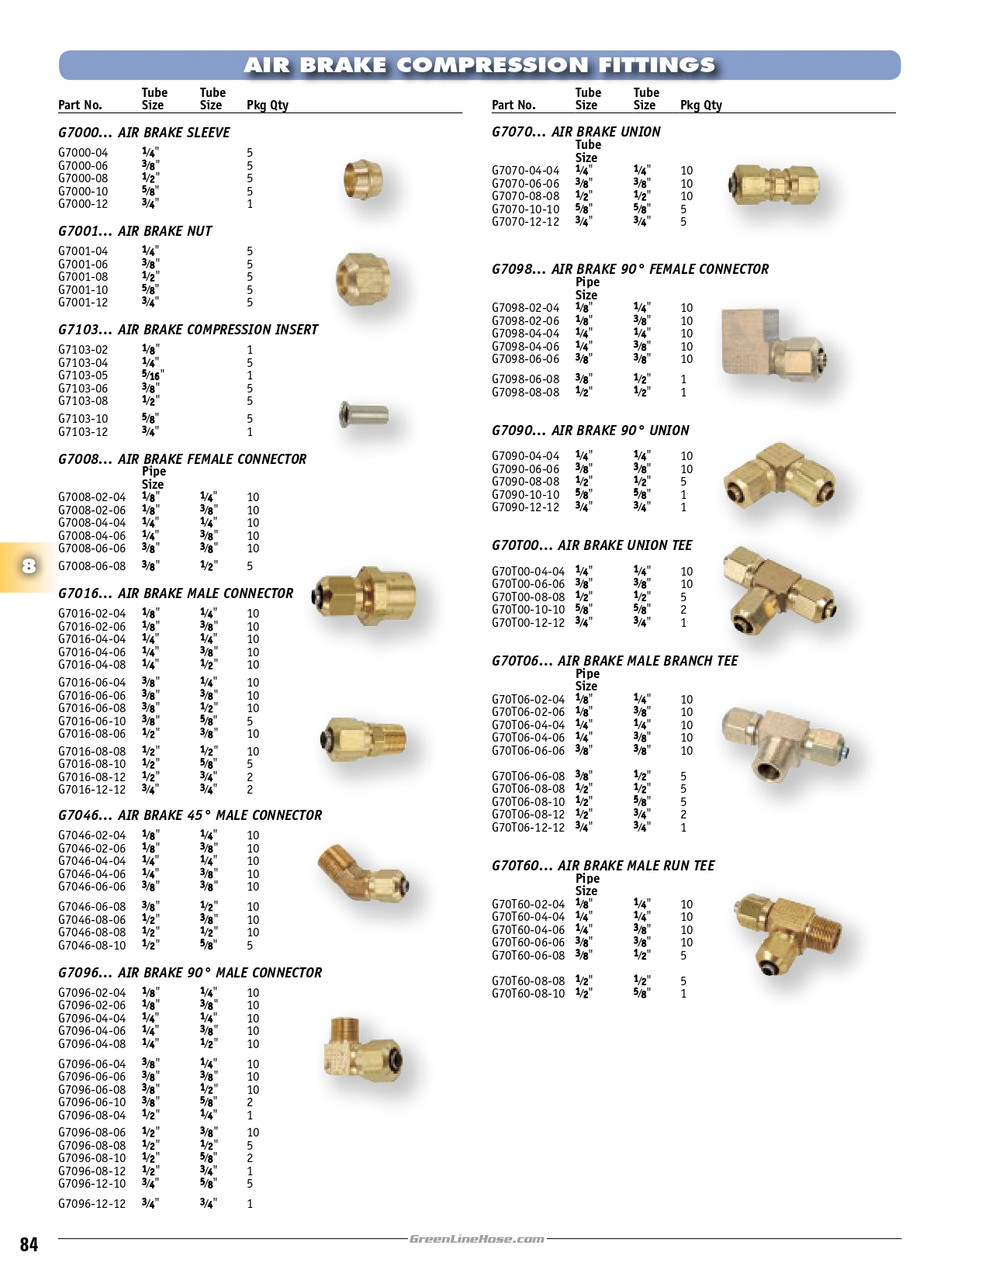 3/8 x 1/2 x 1/2" Brass DOT Male NPT - Compression - Compression Tee   G70T06-06-08